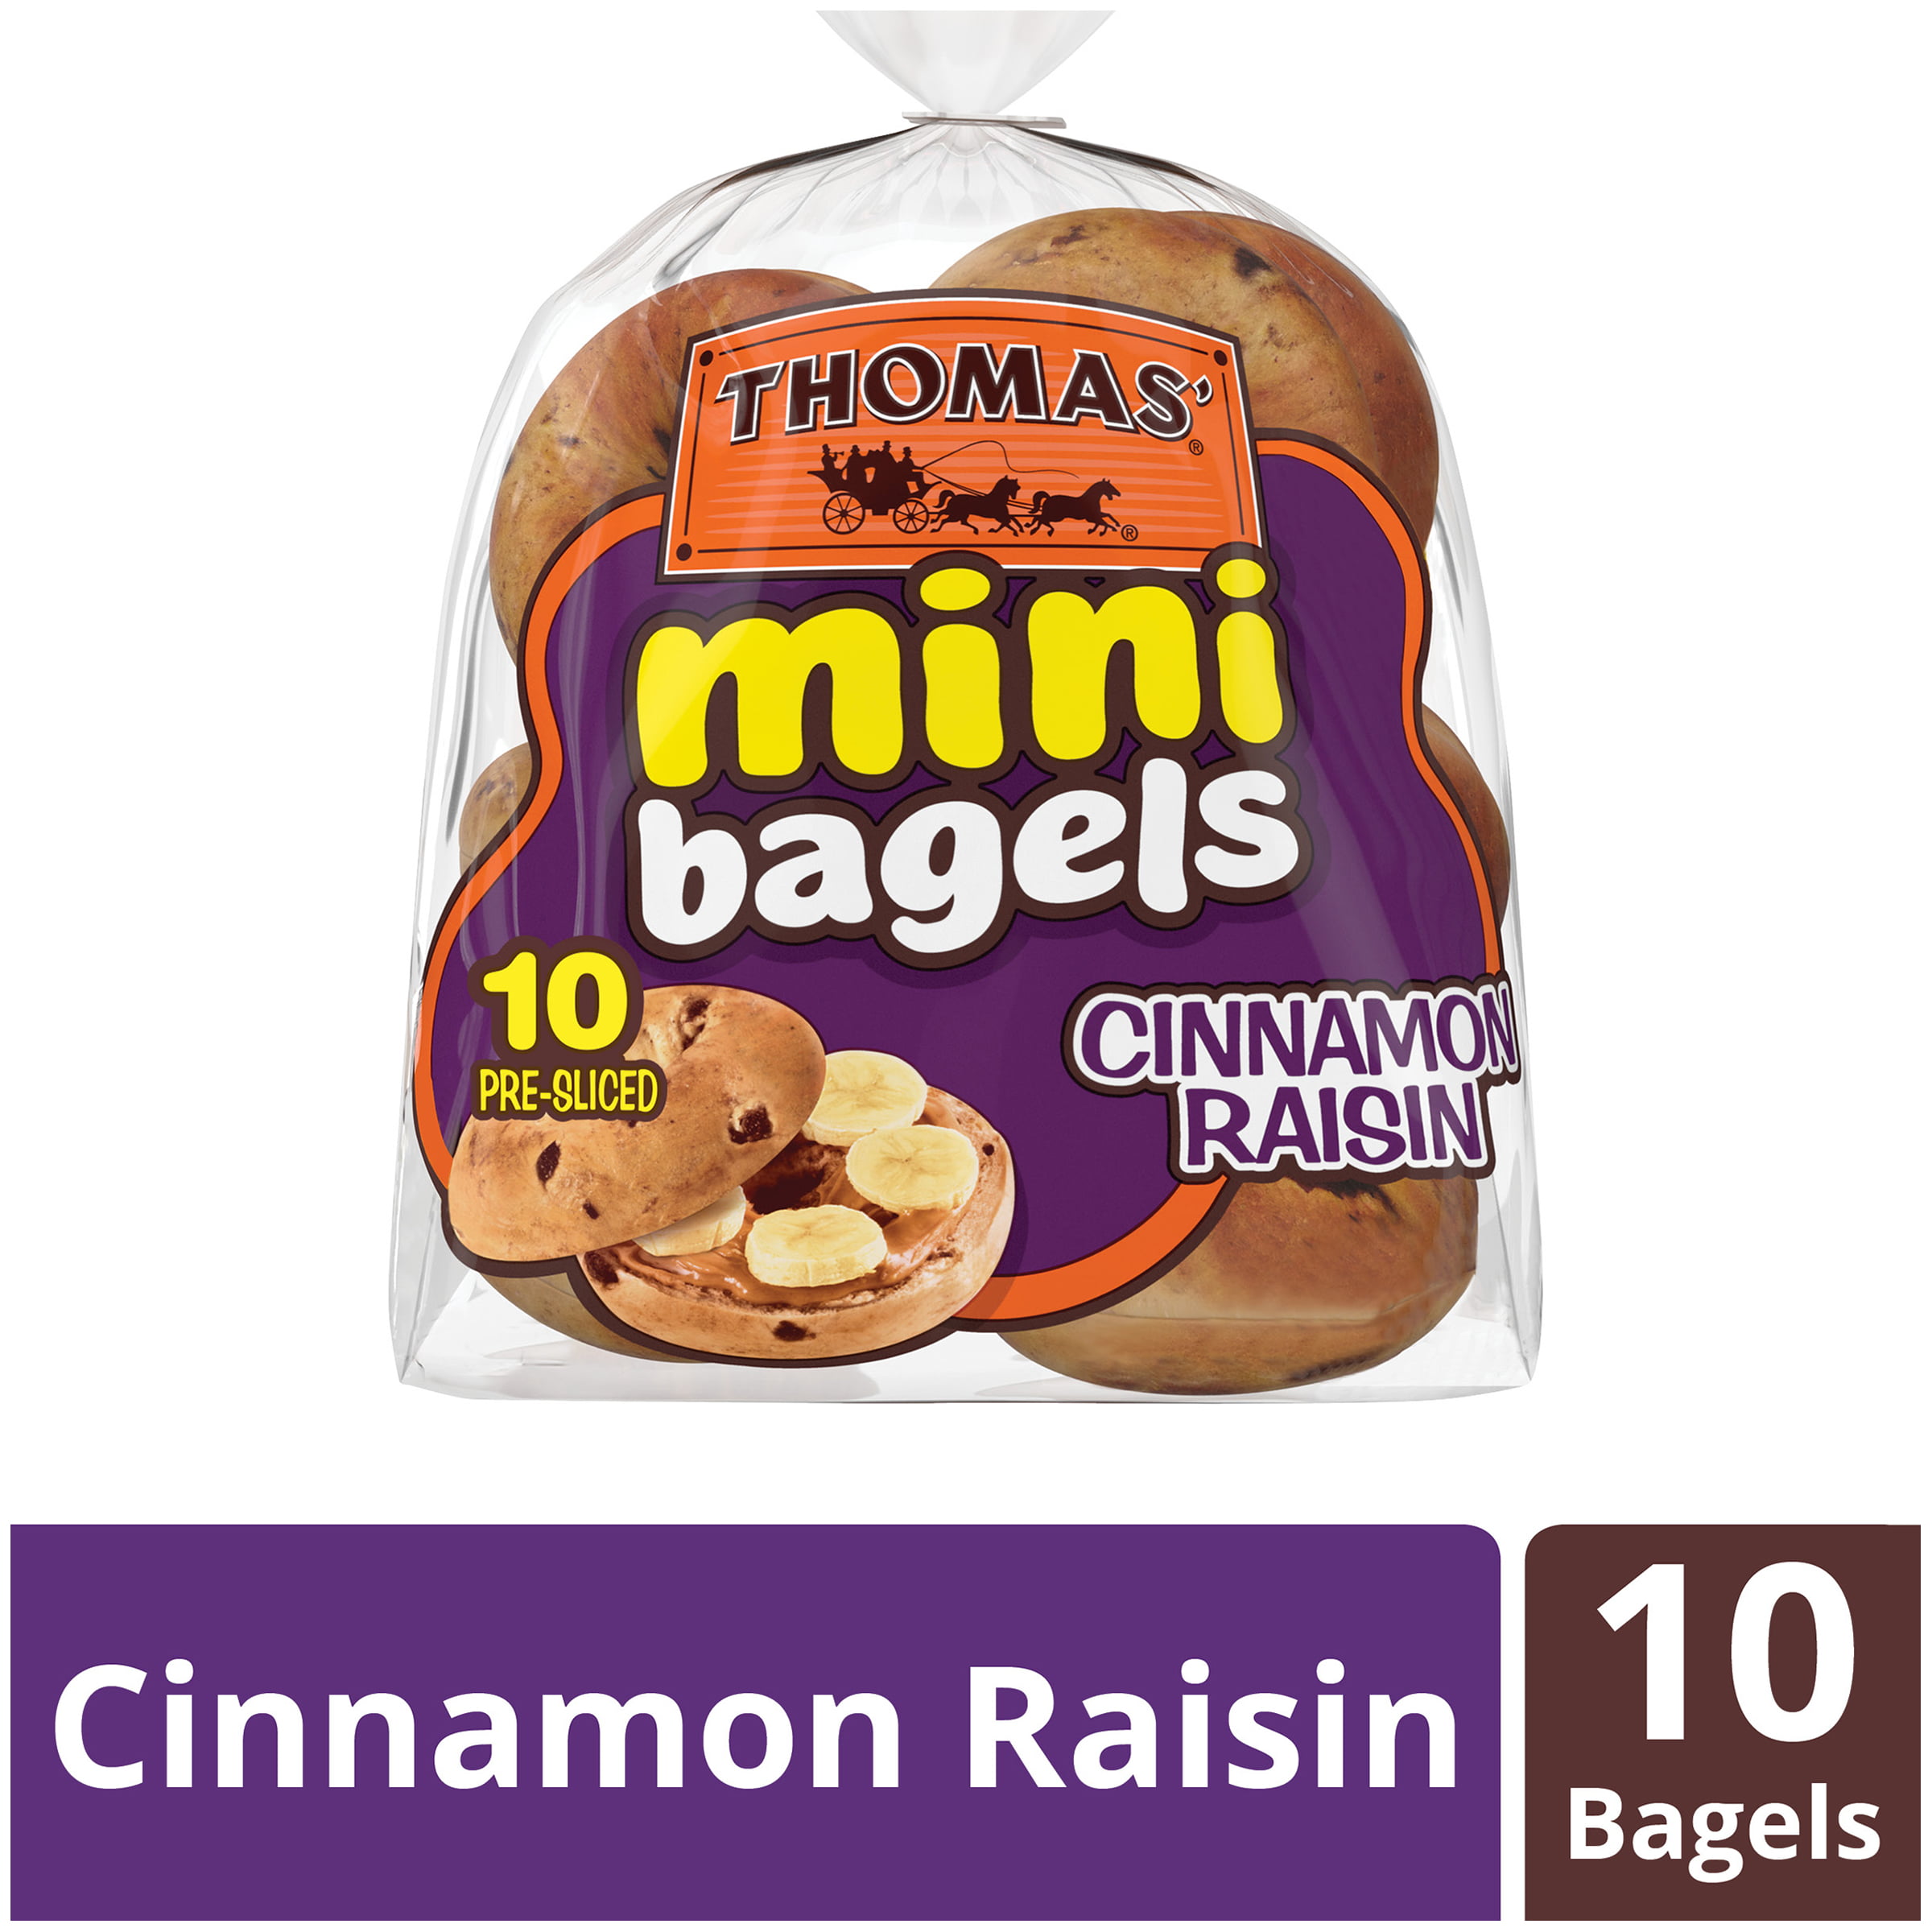 Thomas' Cinnamon Raisin Mini Bagels, Great After School Snacks, 10 cou...